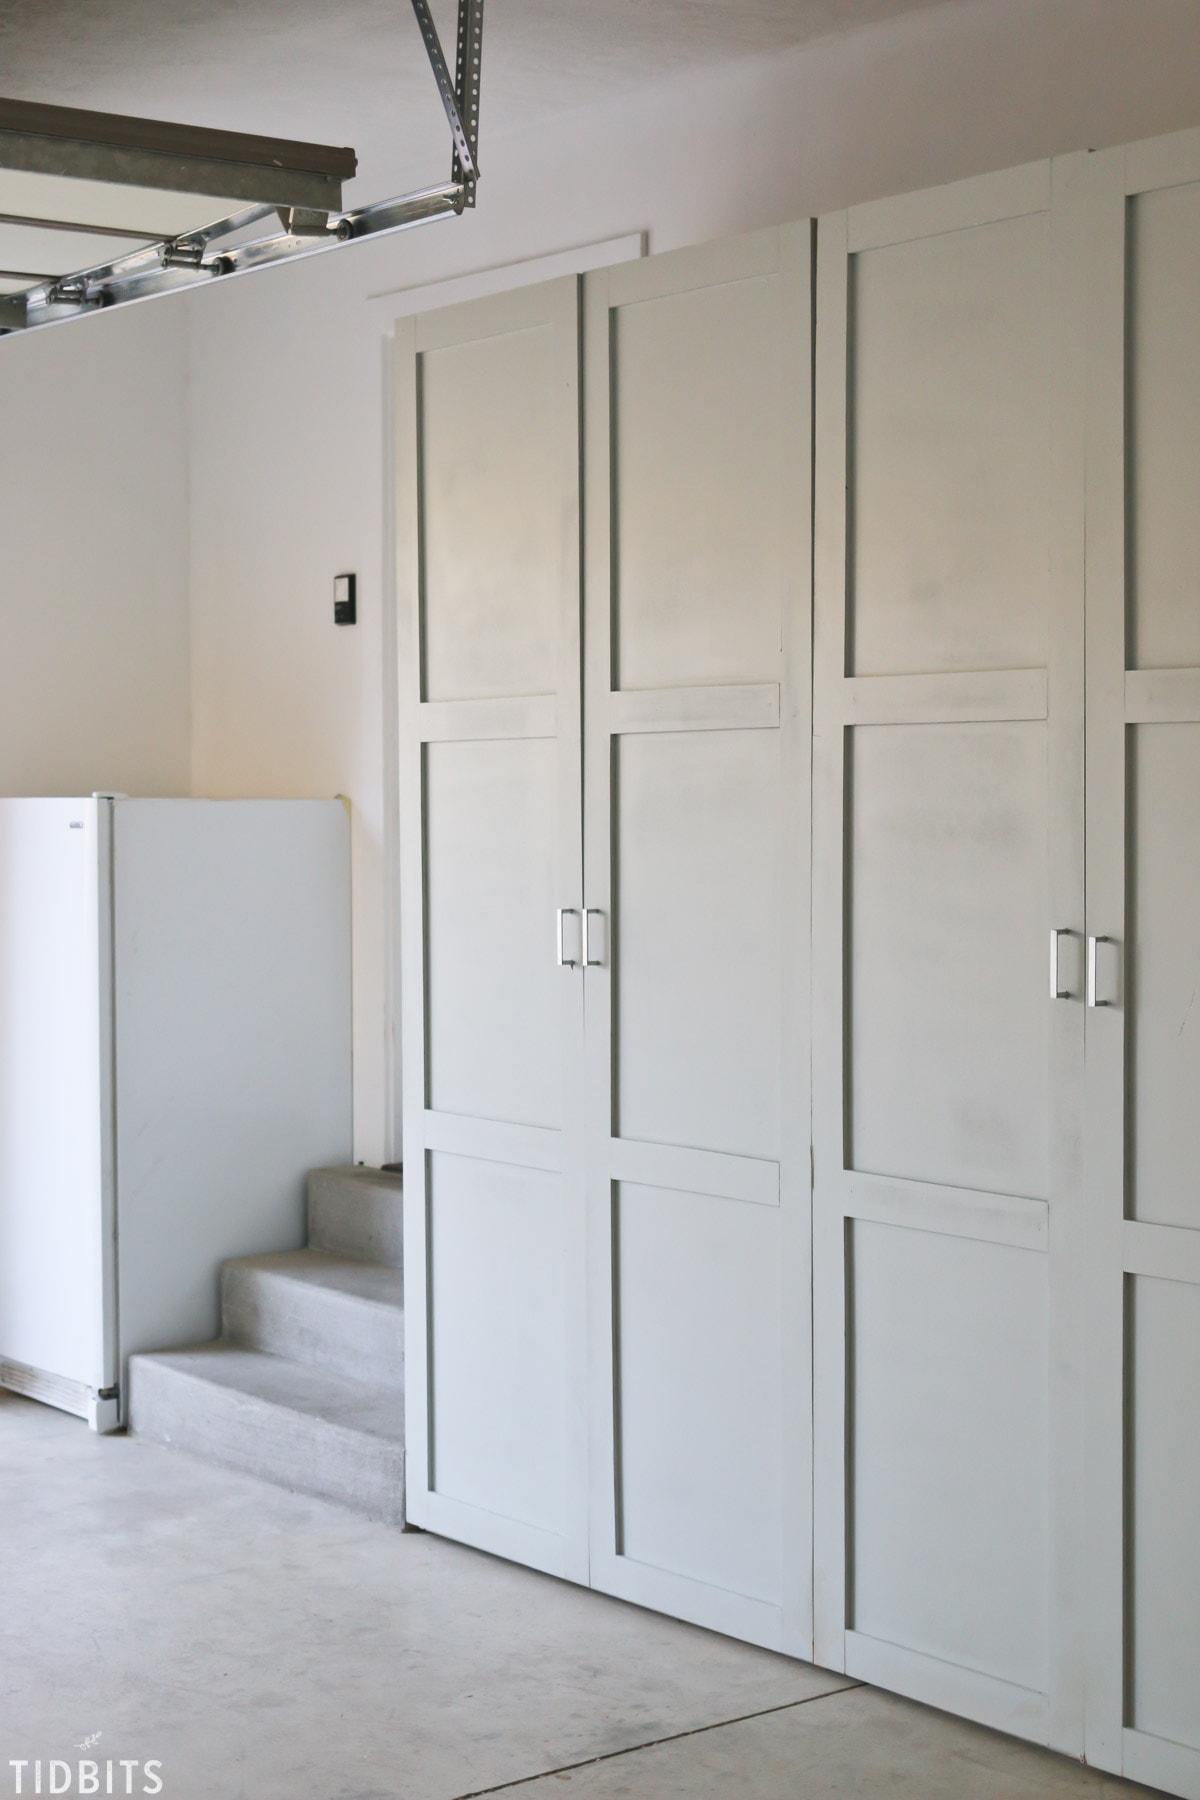 Garage Storage Cabinets Free Building, Large Garage Storage Cabinets With Doors